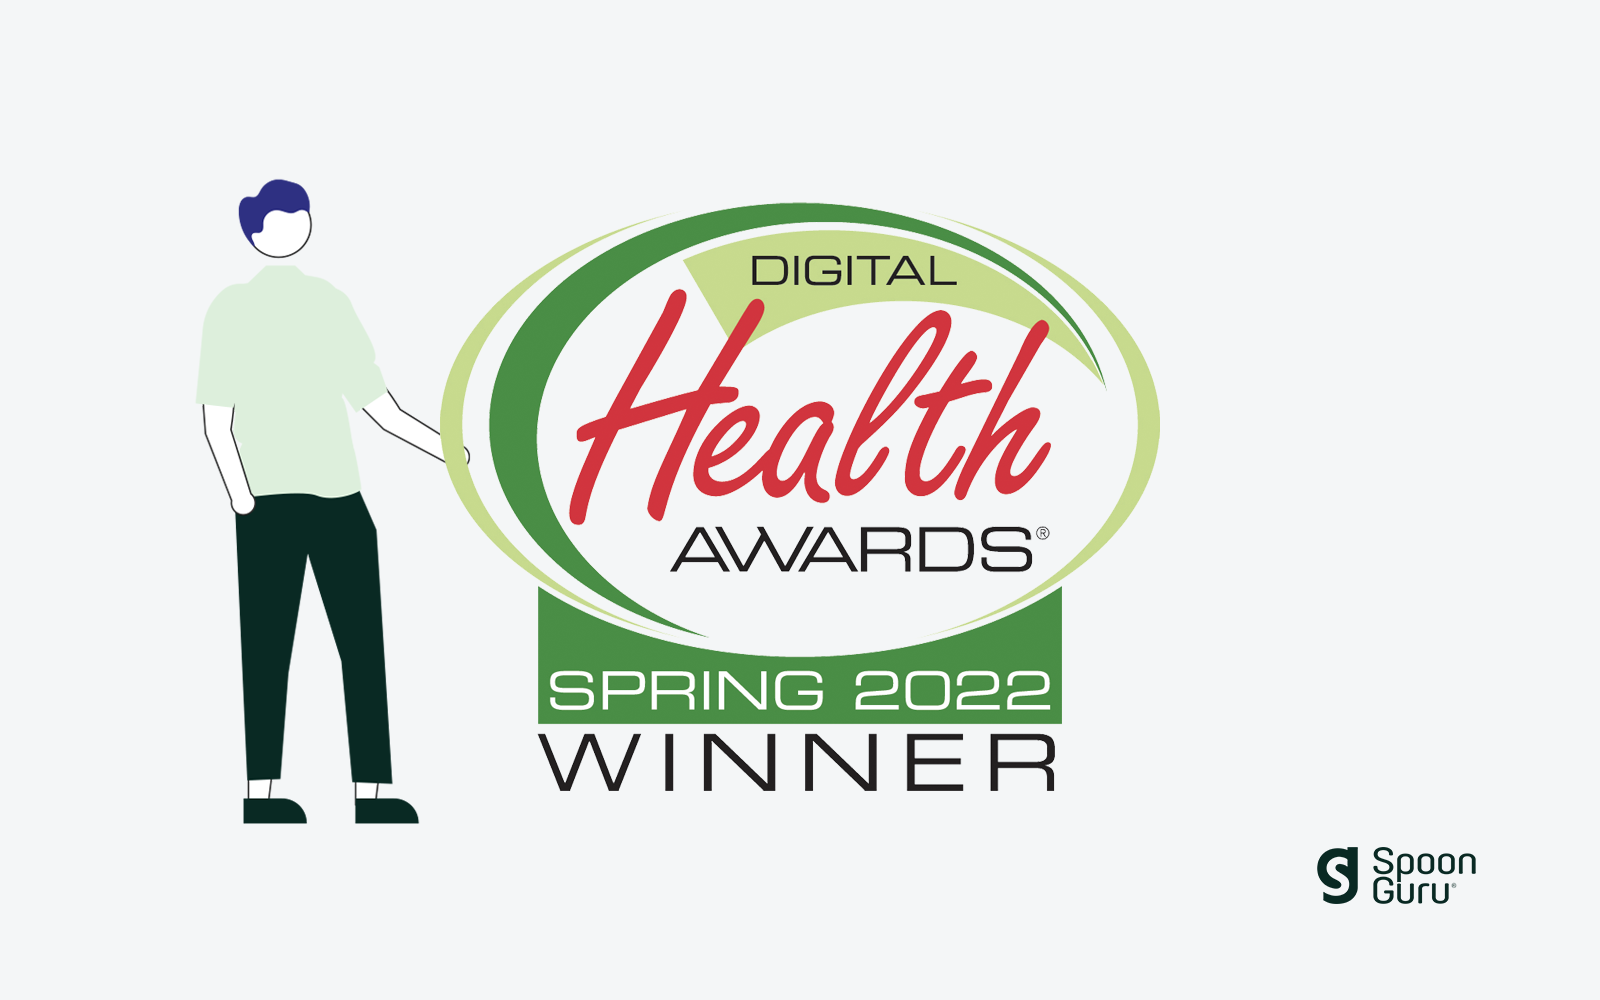 Spoon Guru receives Digital Health Award, Spring 2022